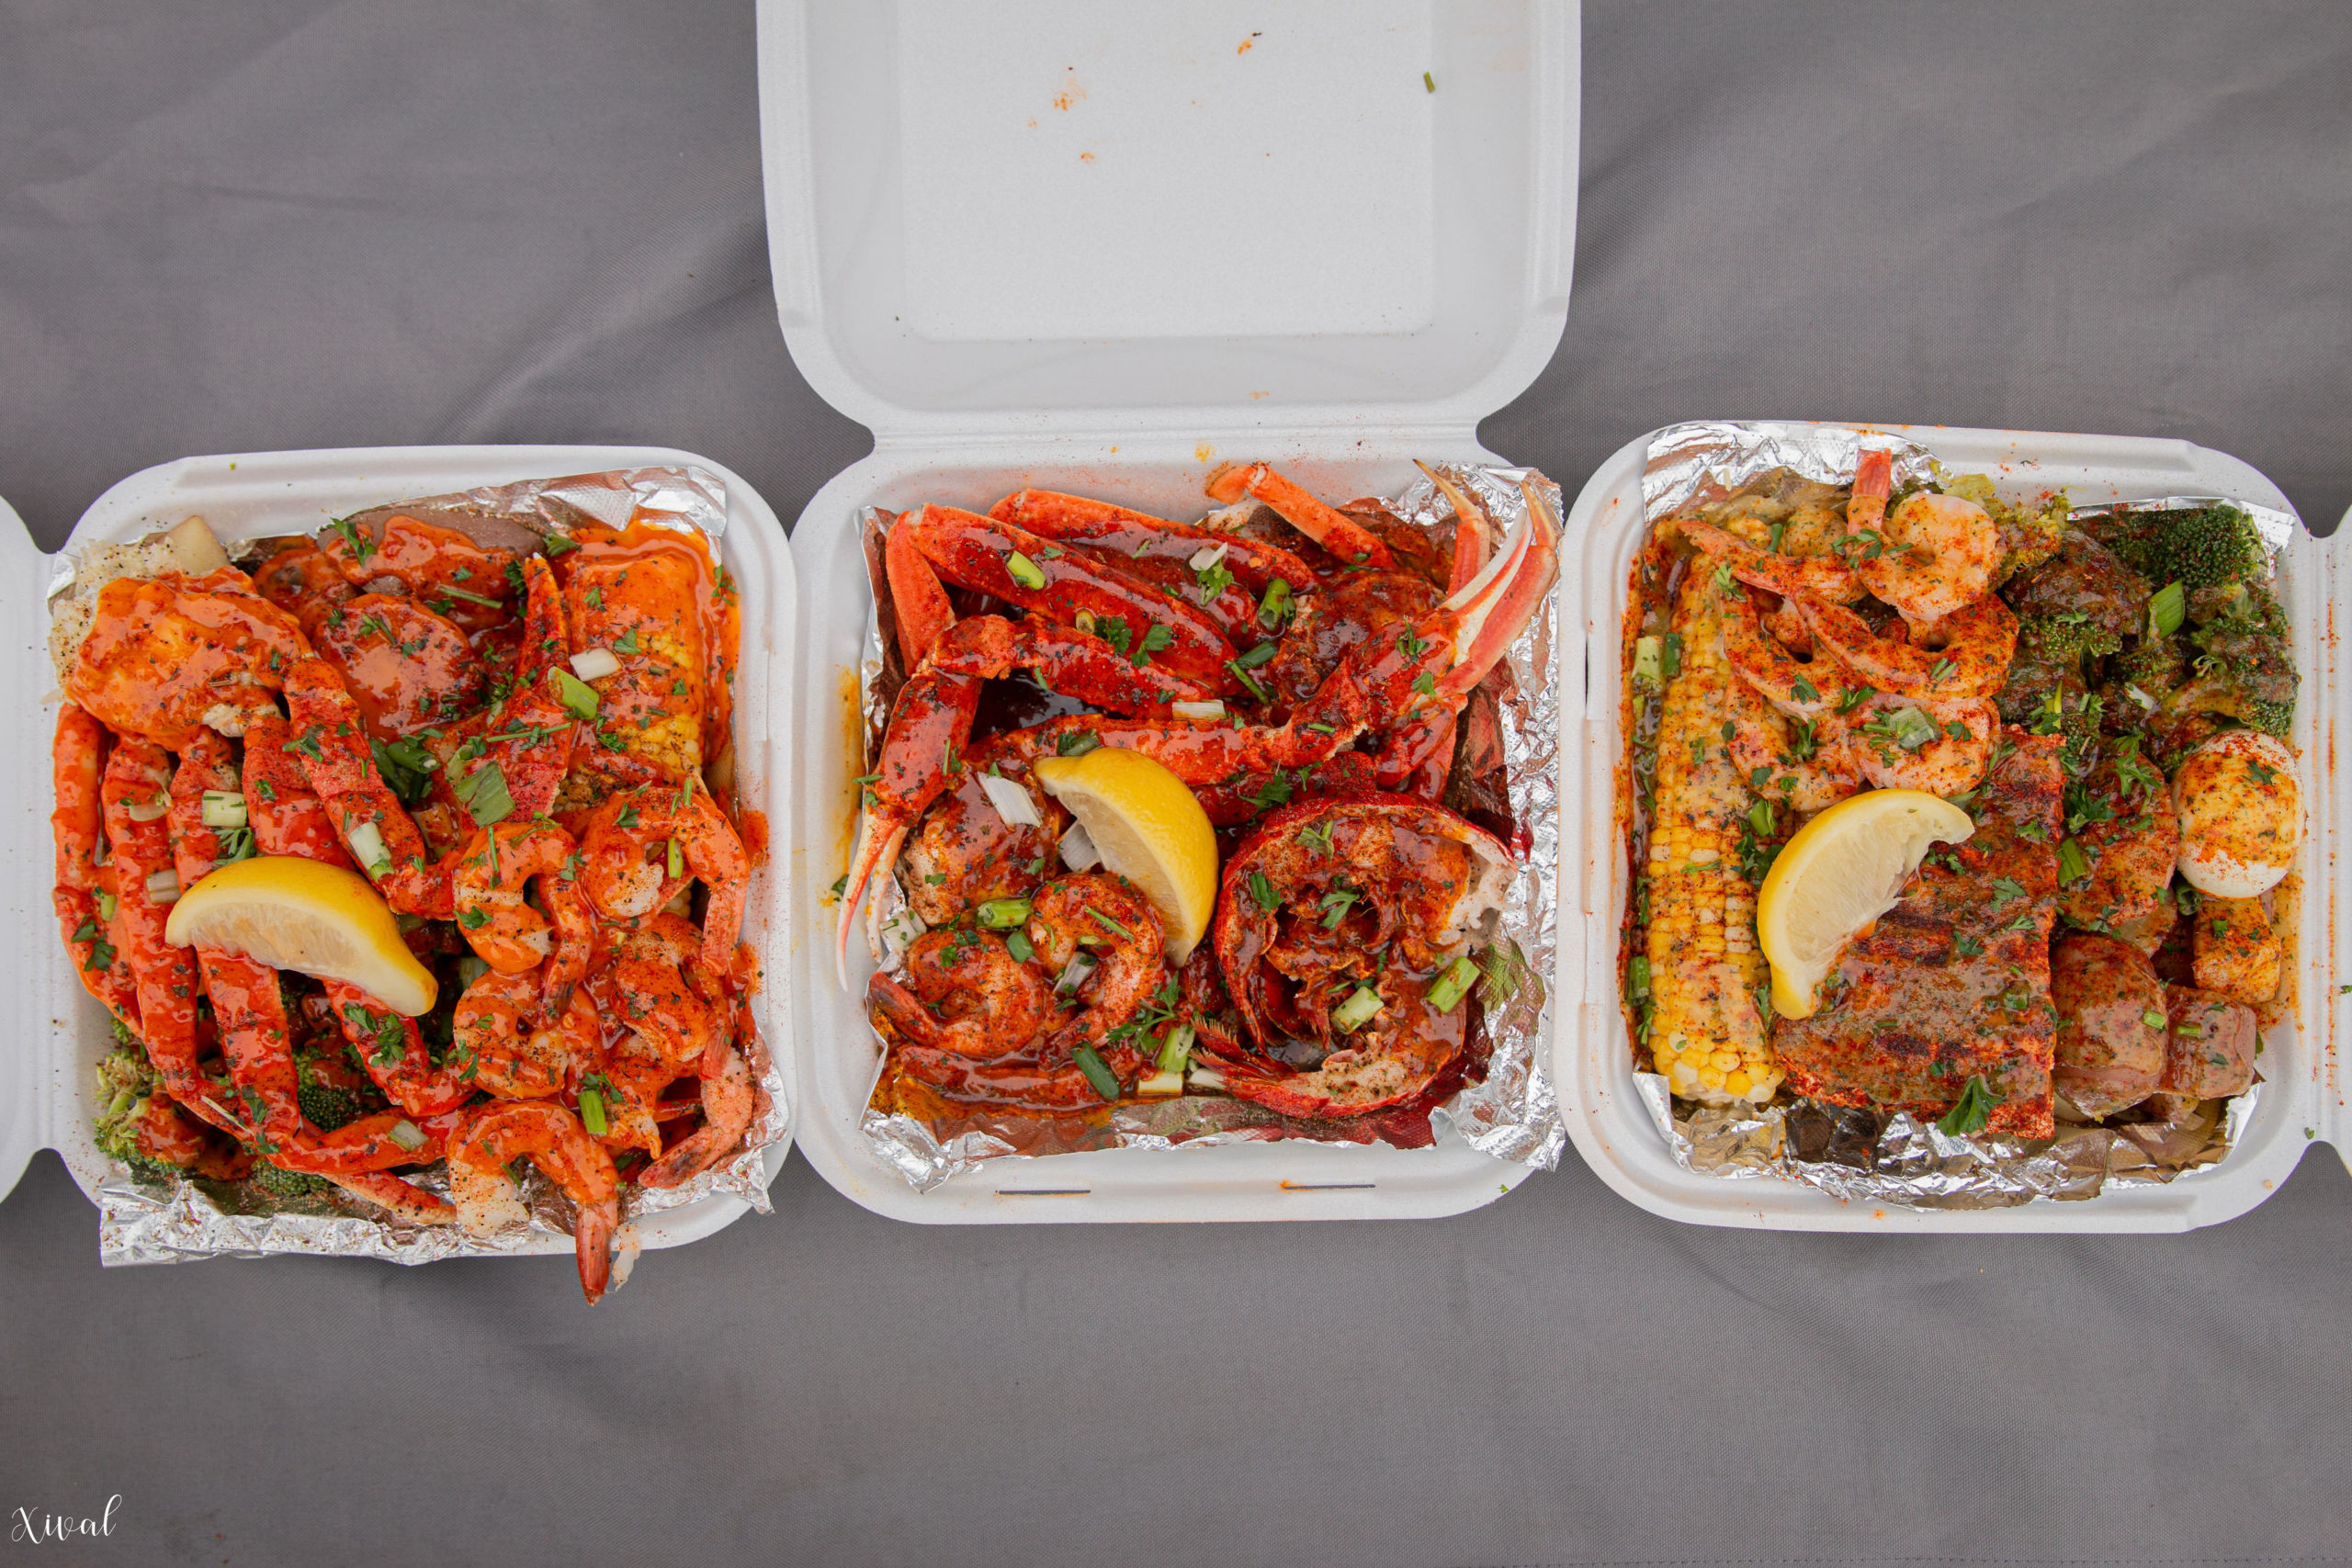 Loaded crab legs & shrimp tray, classic leg, tail & shrimp tray, and loaded salmon & shrimp tray